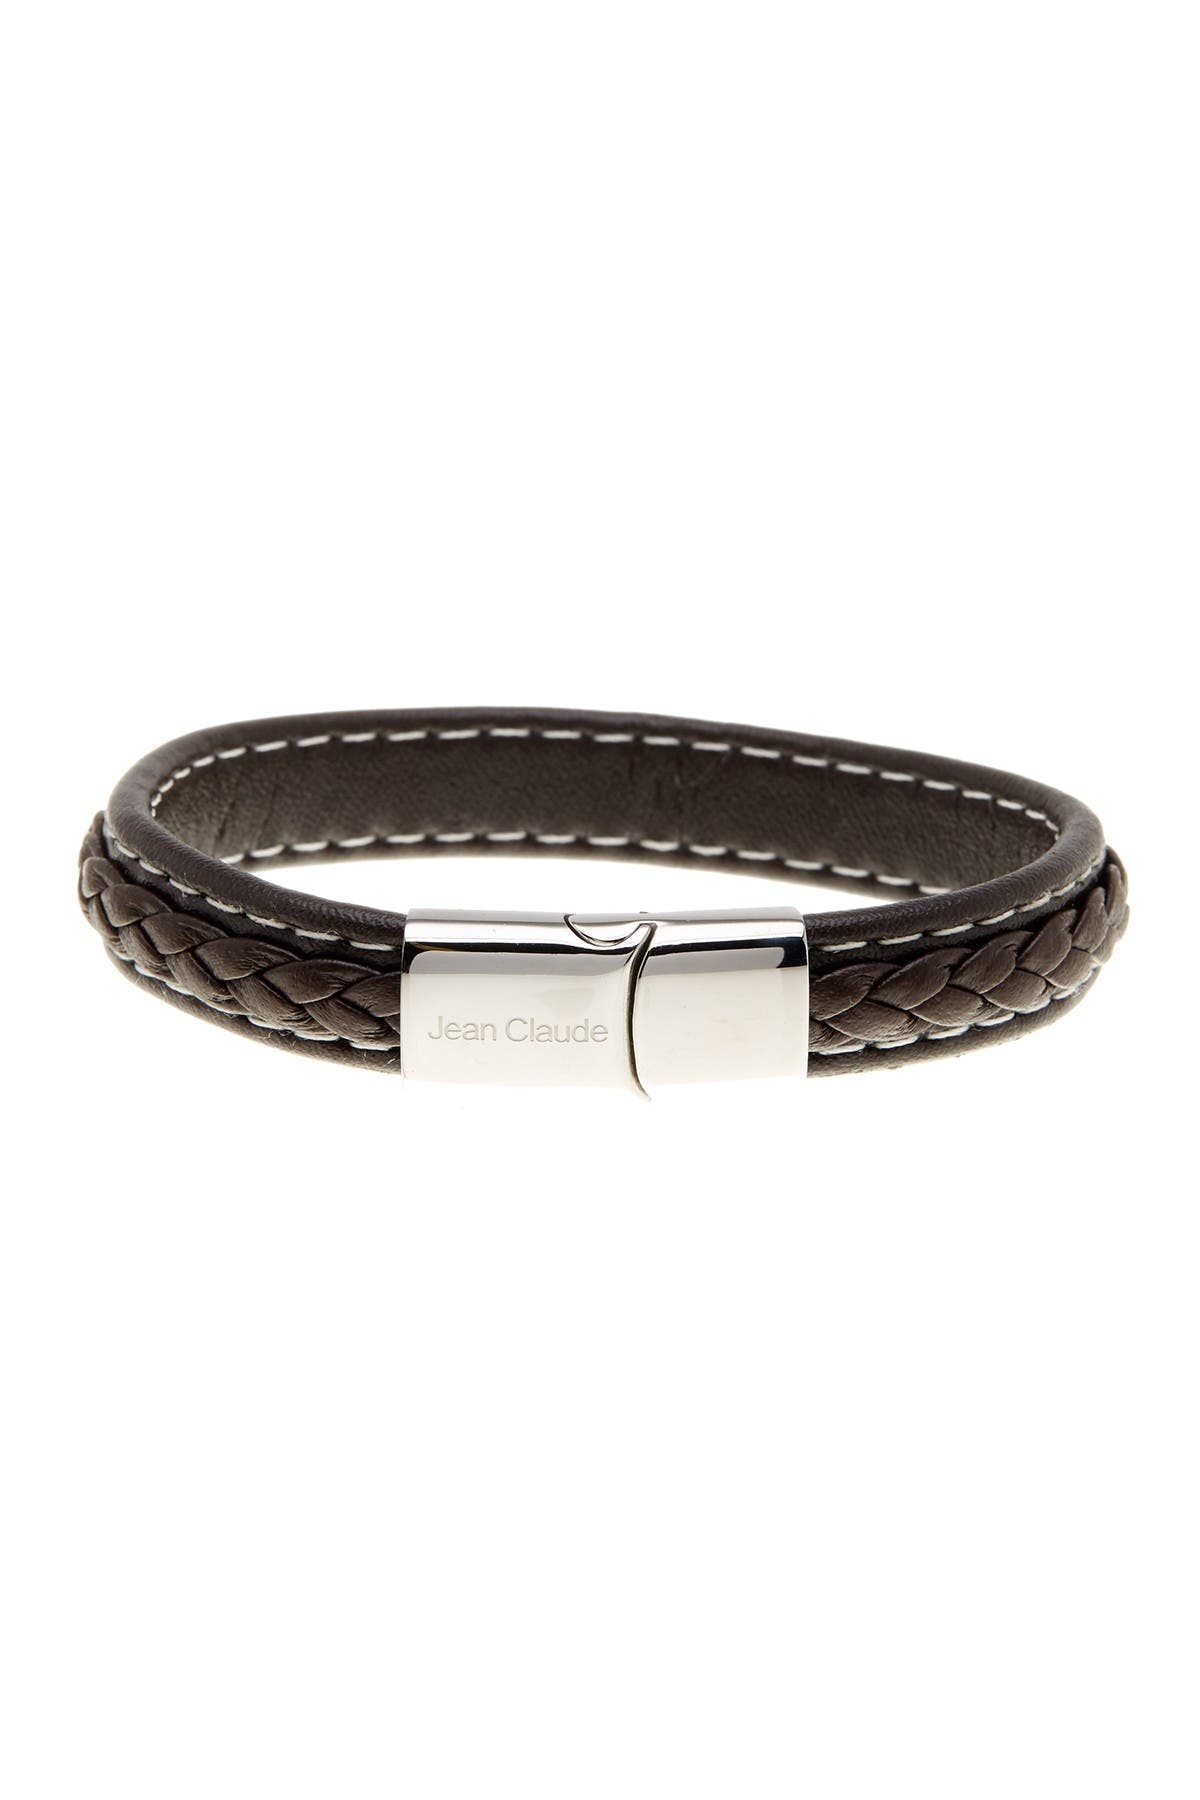 Jean Claude | Braided Leather Bracelet 